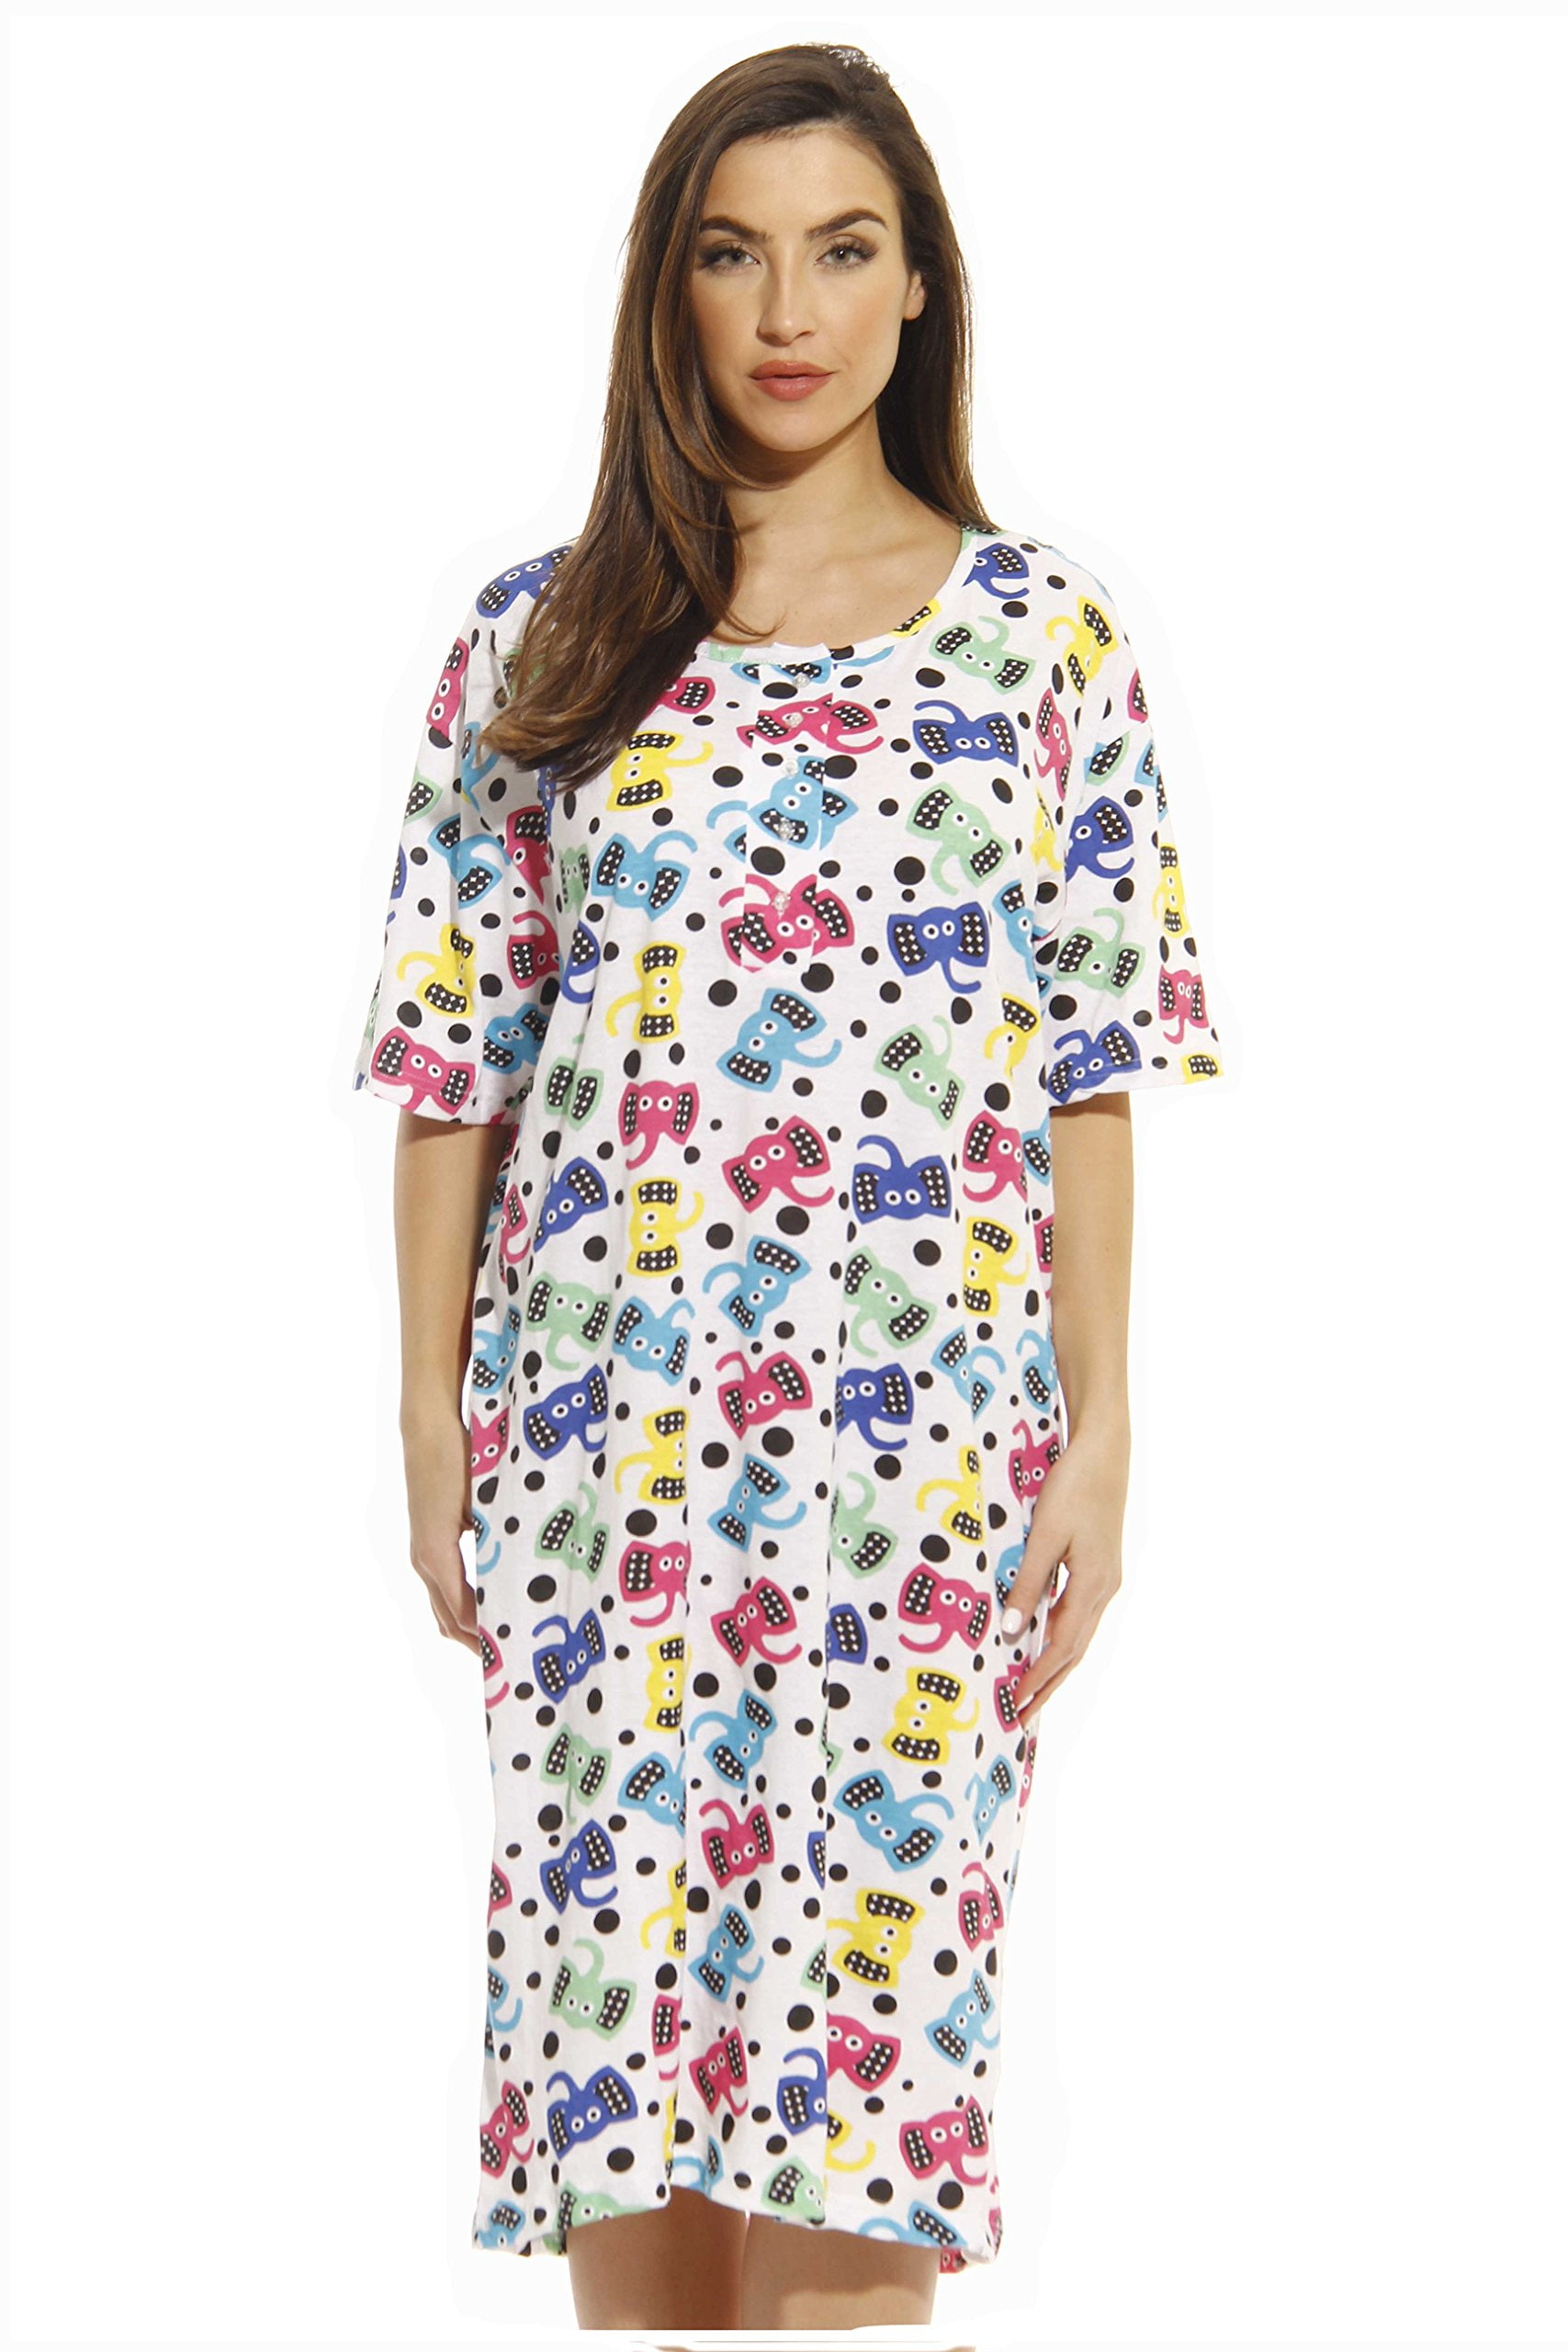 Just Love - Short Sleeve Nightgown / Sleep Dress for Women / Sleepwear ...